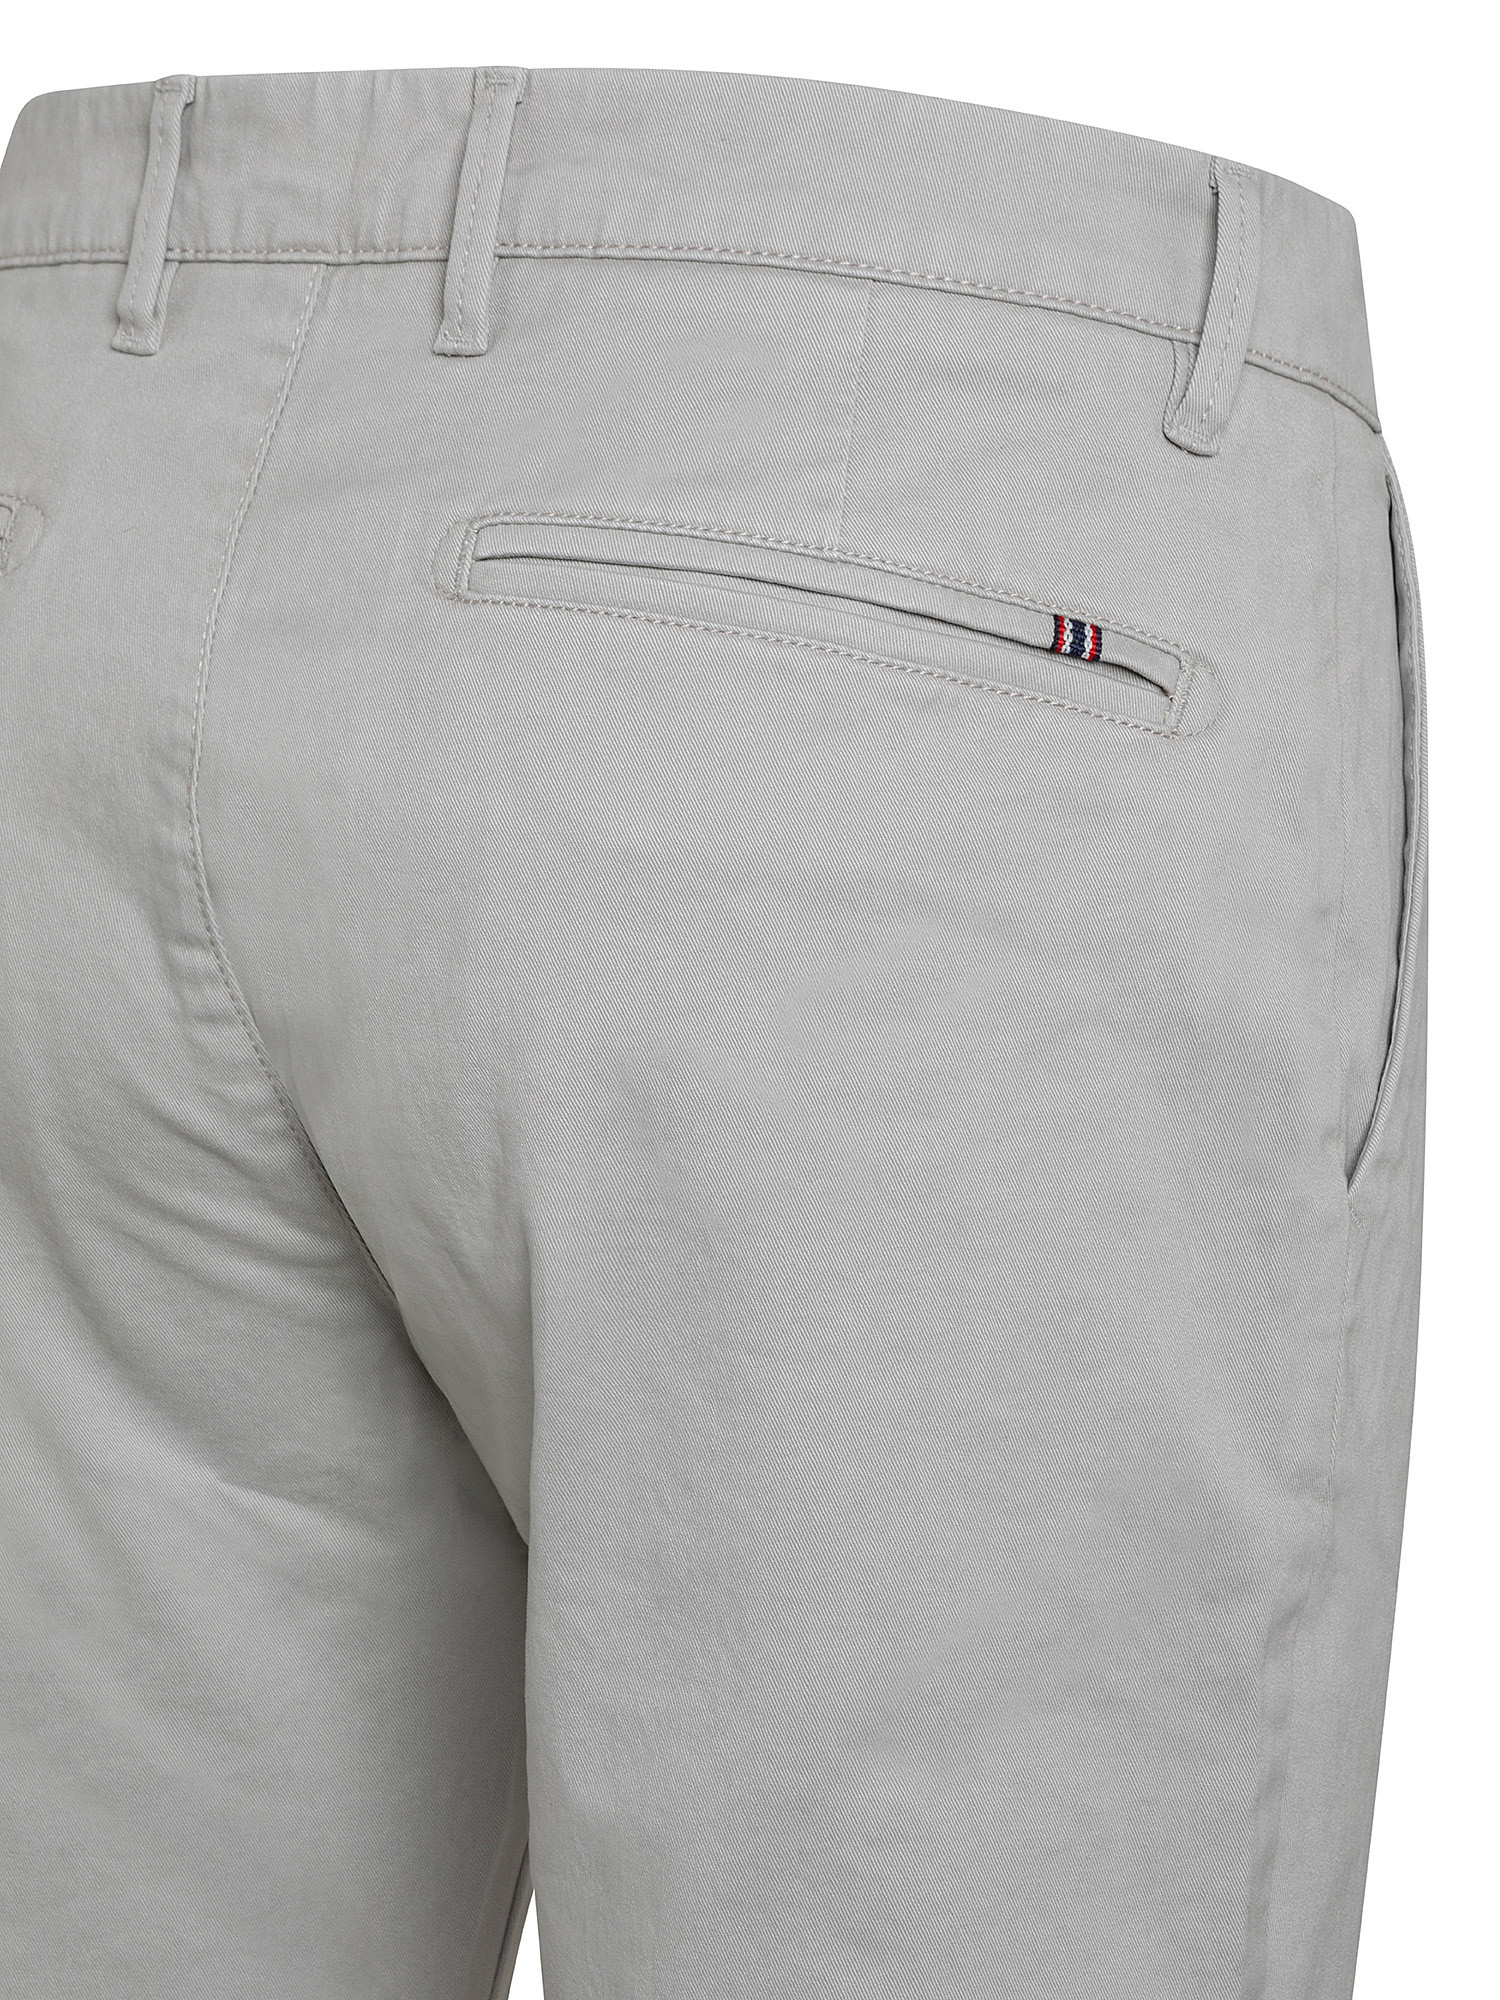 Pantalone chinos in cotone stretch, Grigio perla, large image number 2